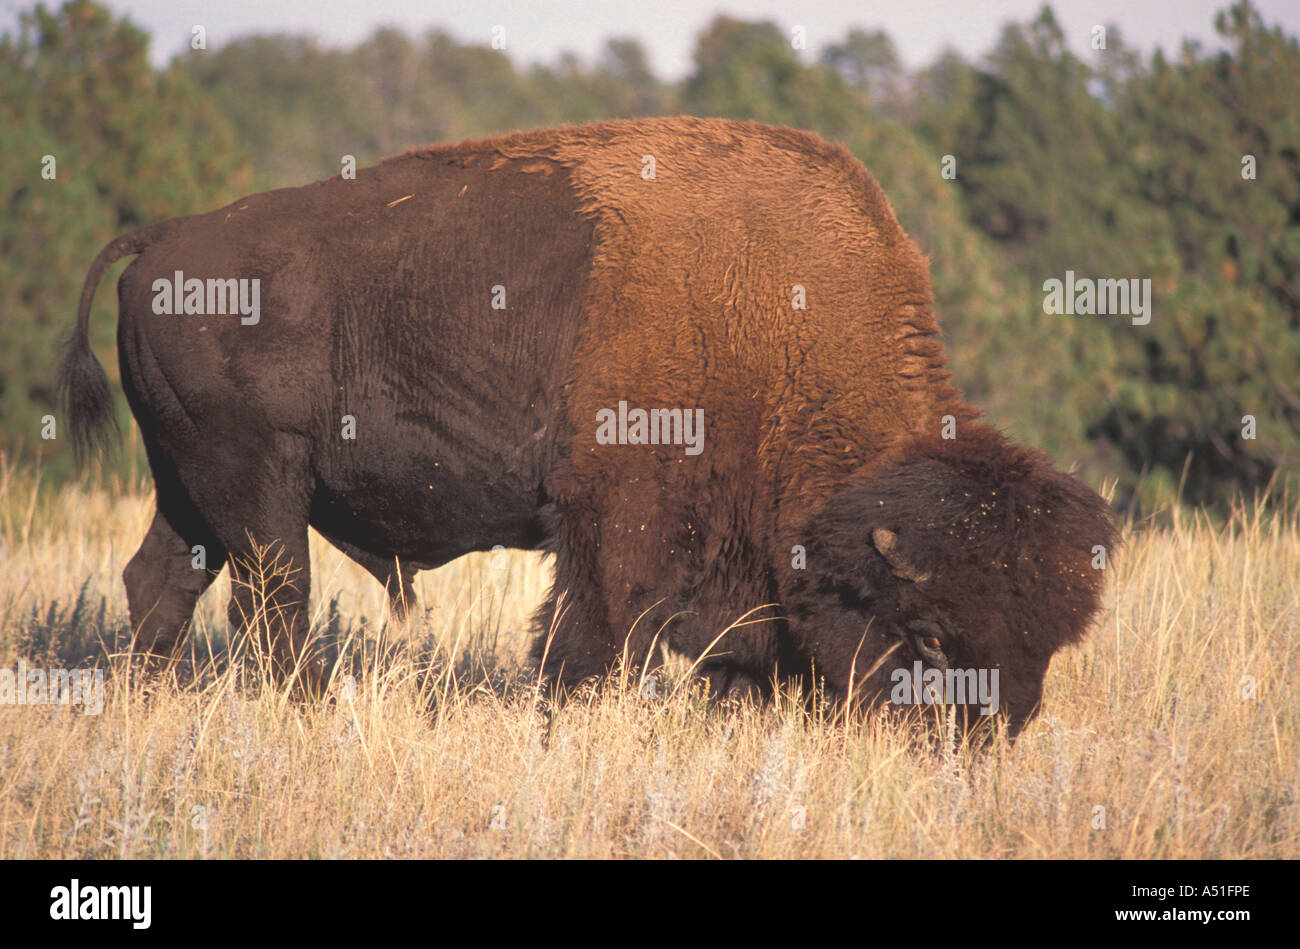 American Bison Tiere Buffel Heftige Auge Closeup Portrait Stockfotografie Alamy